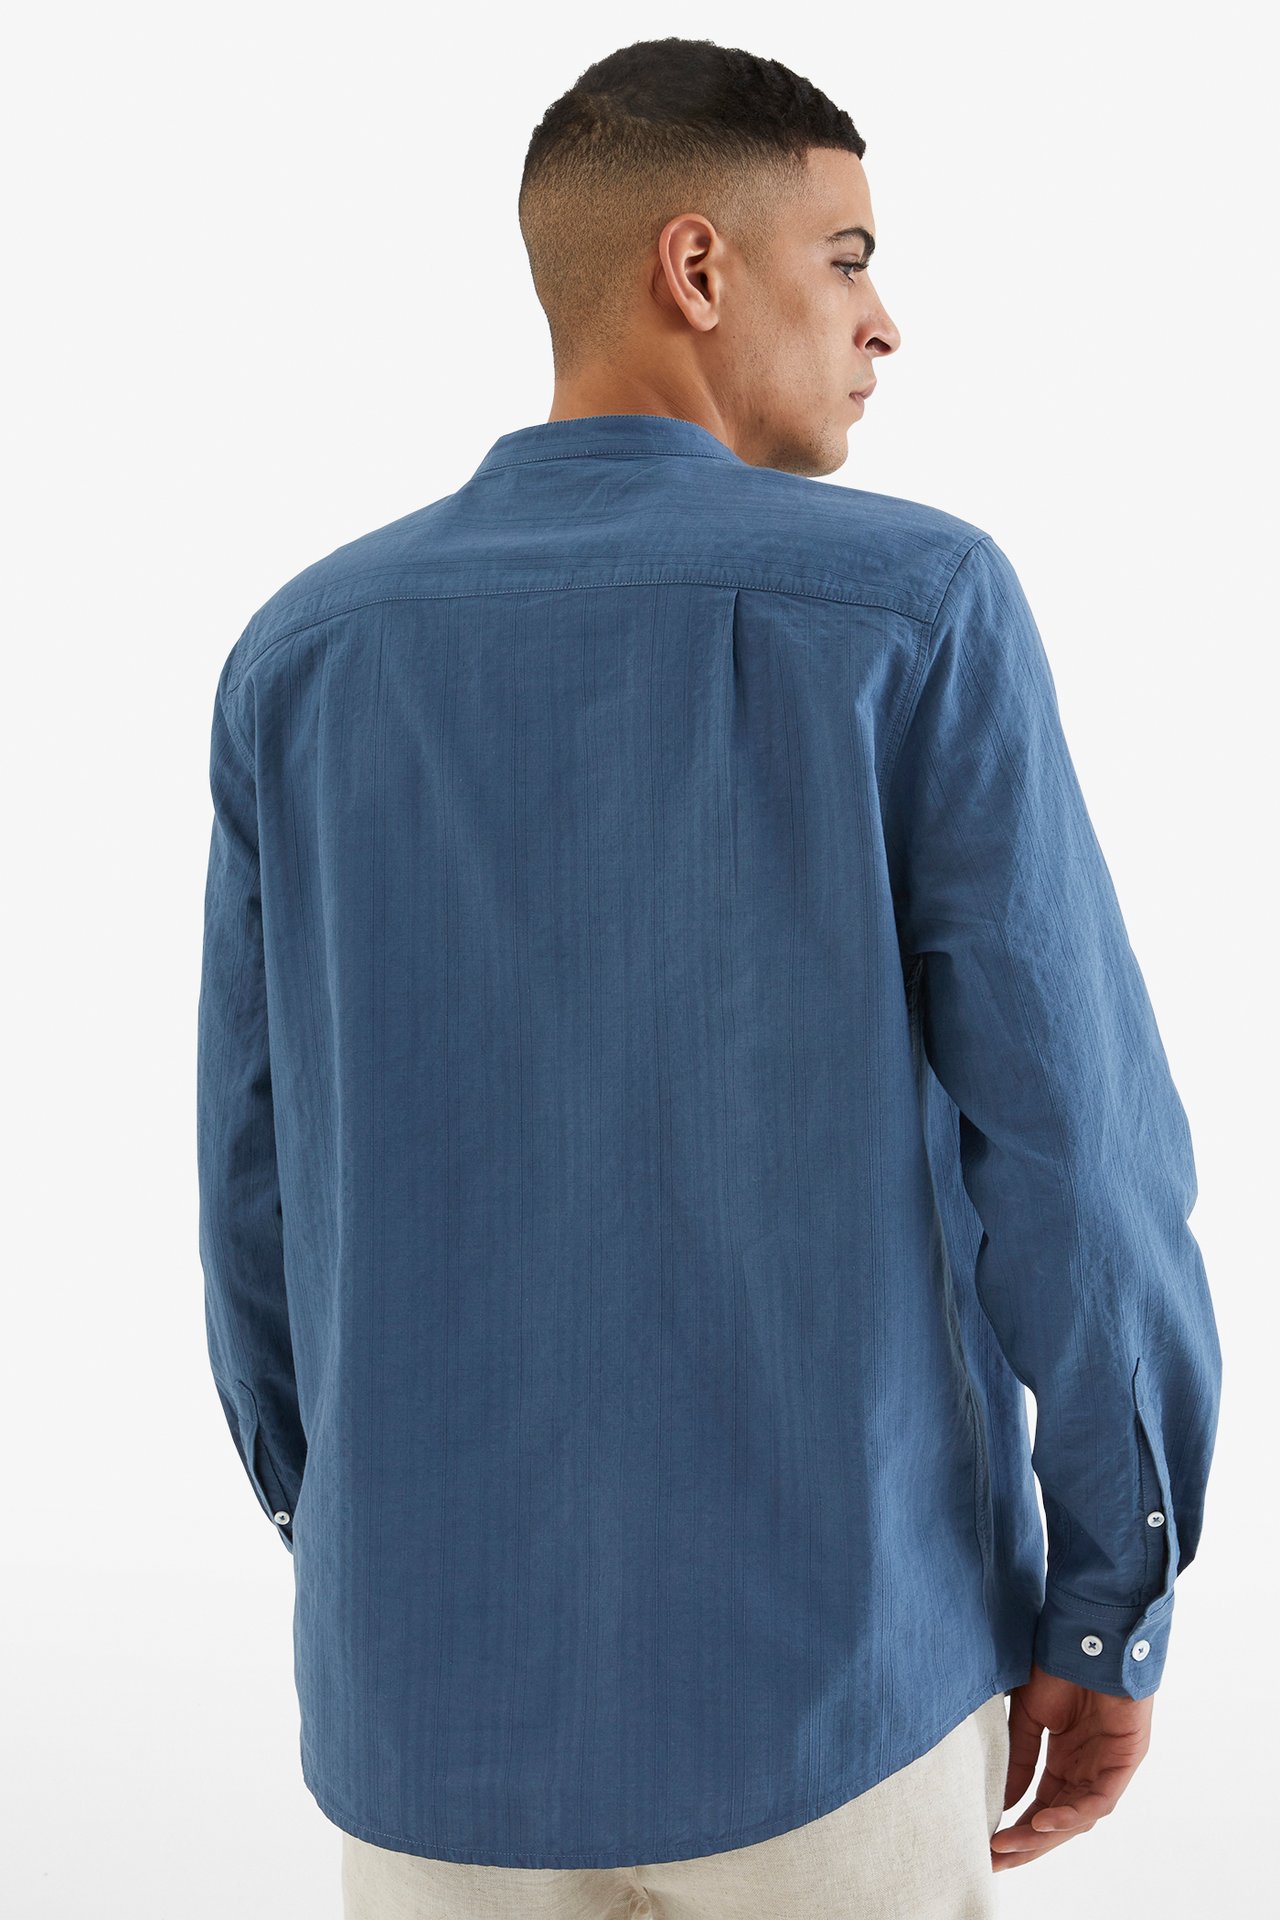 Skjorta med murarkrage - Mörkblå - 189cm / Storlek: M - 4